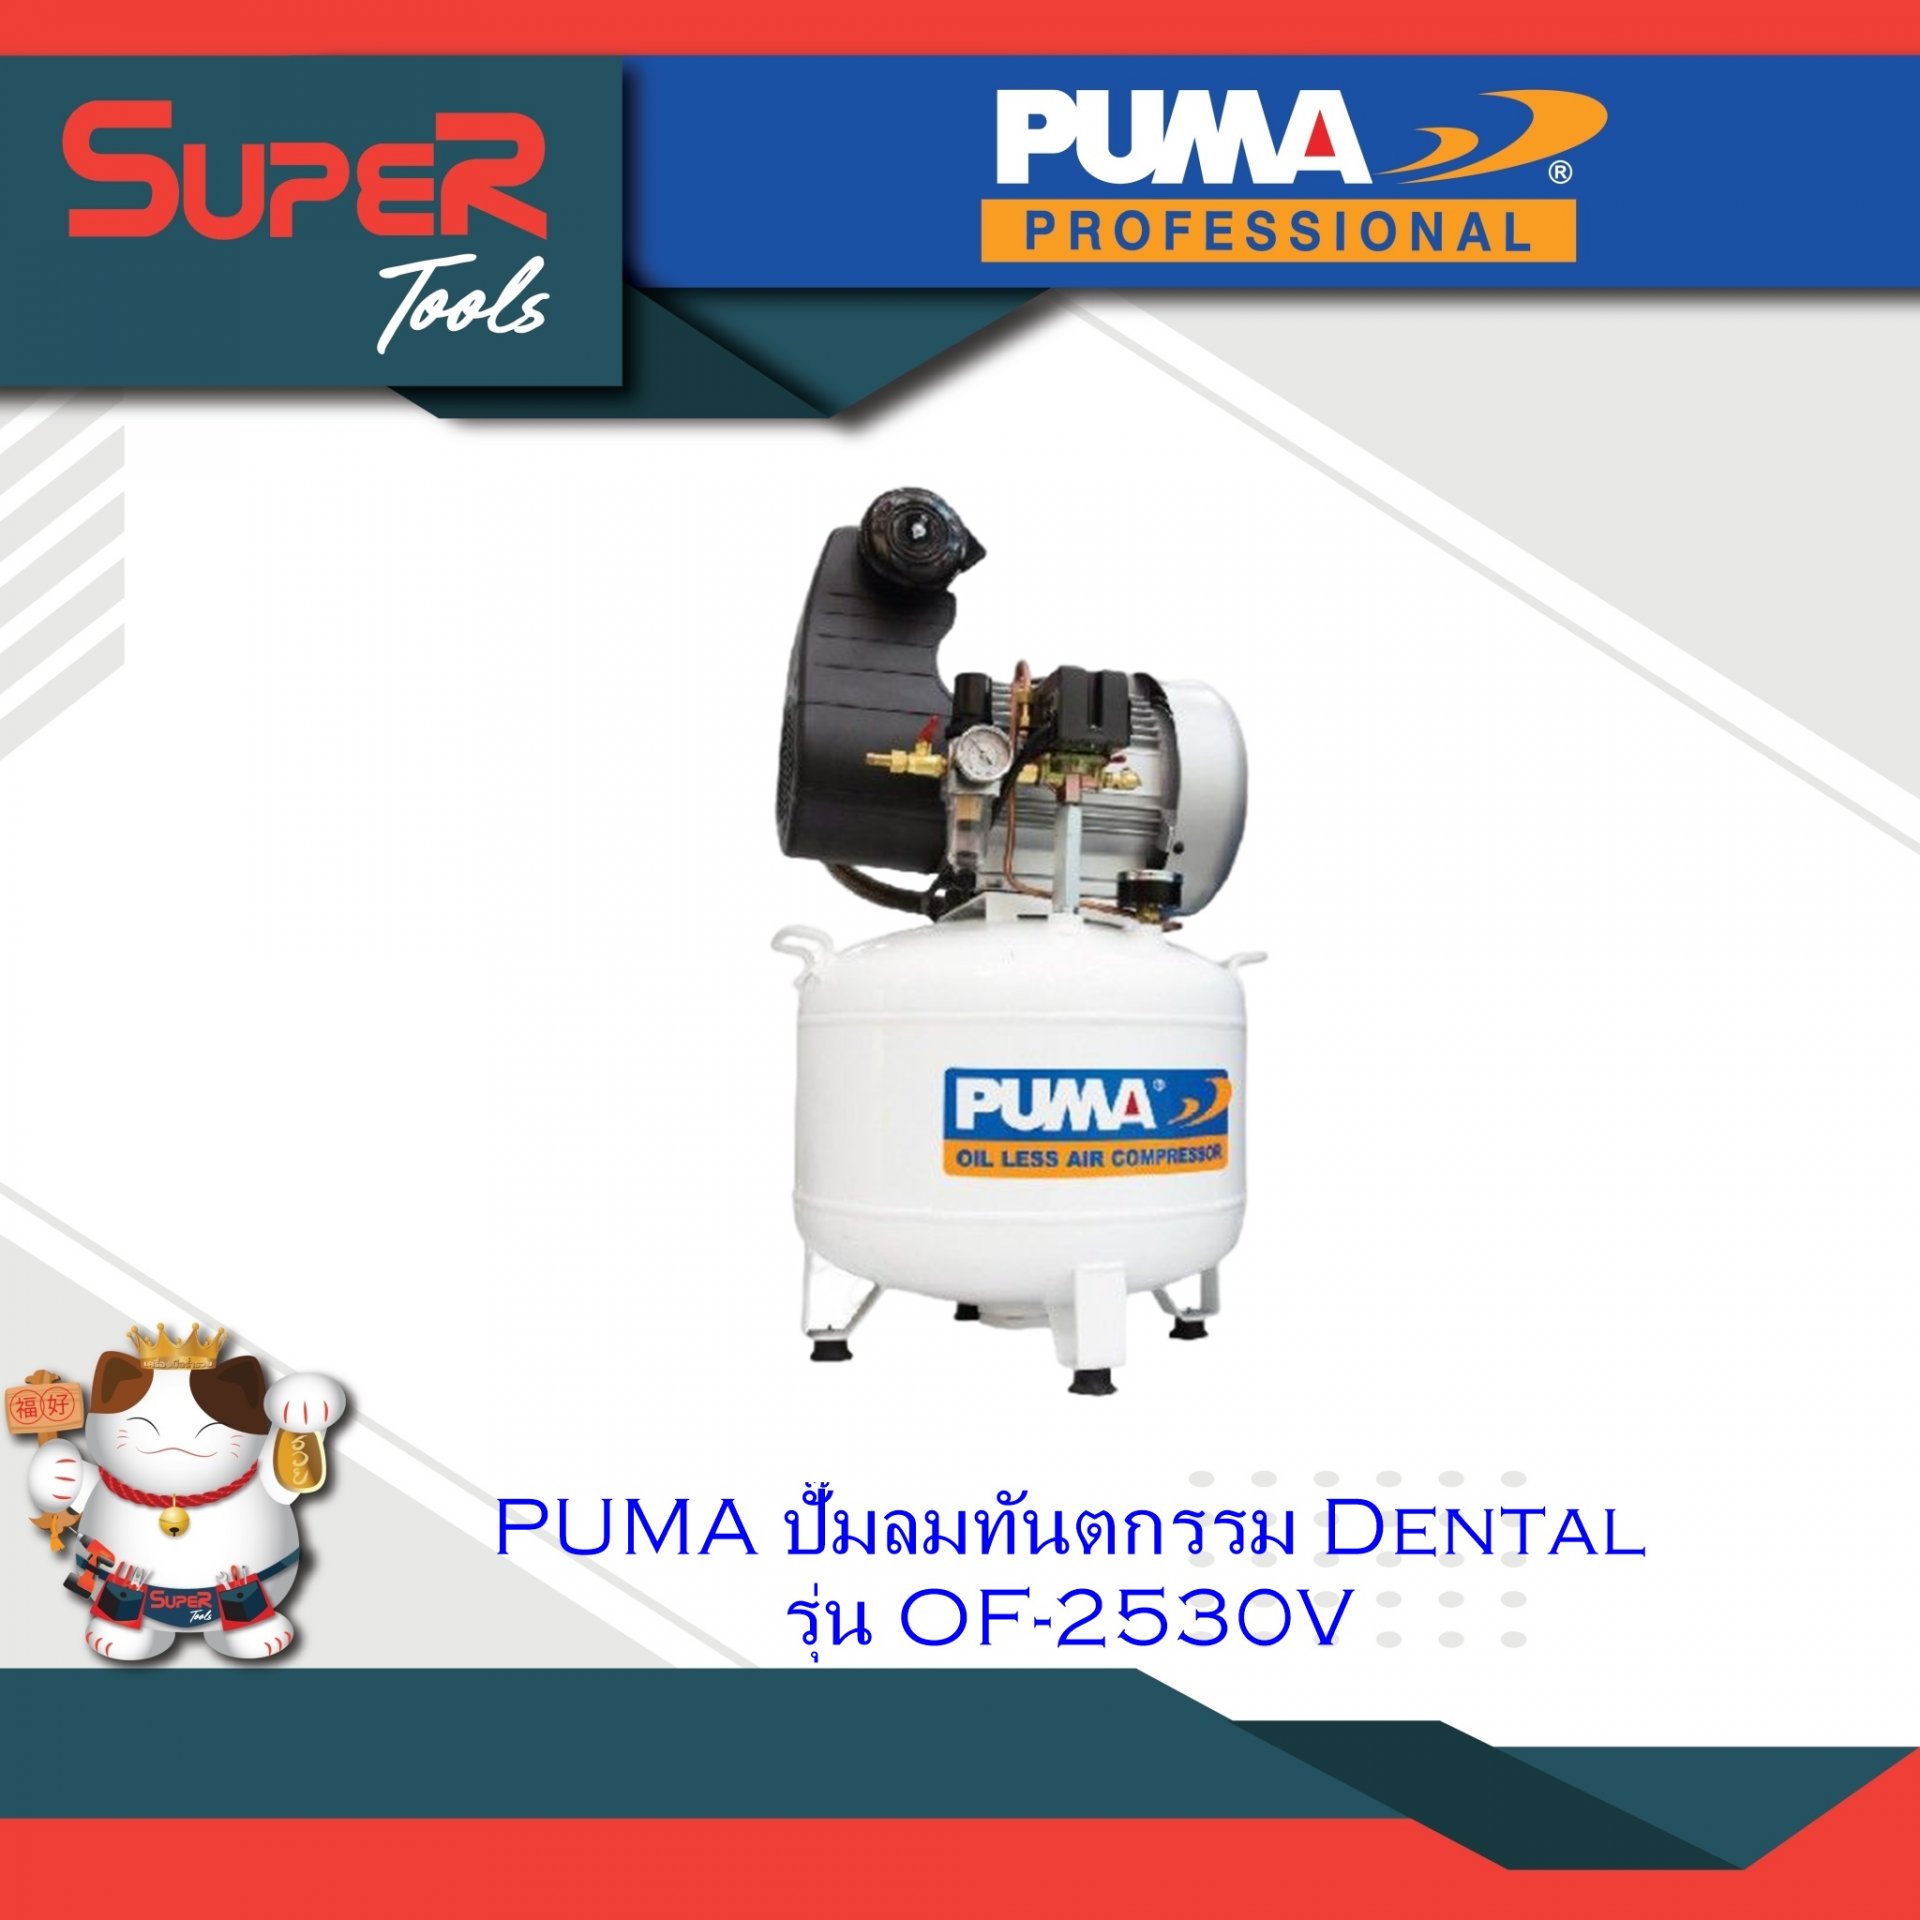 PUMA ปั๊มลมทันตกรรม Dental รุ่น OF-2530V